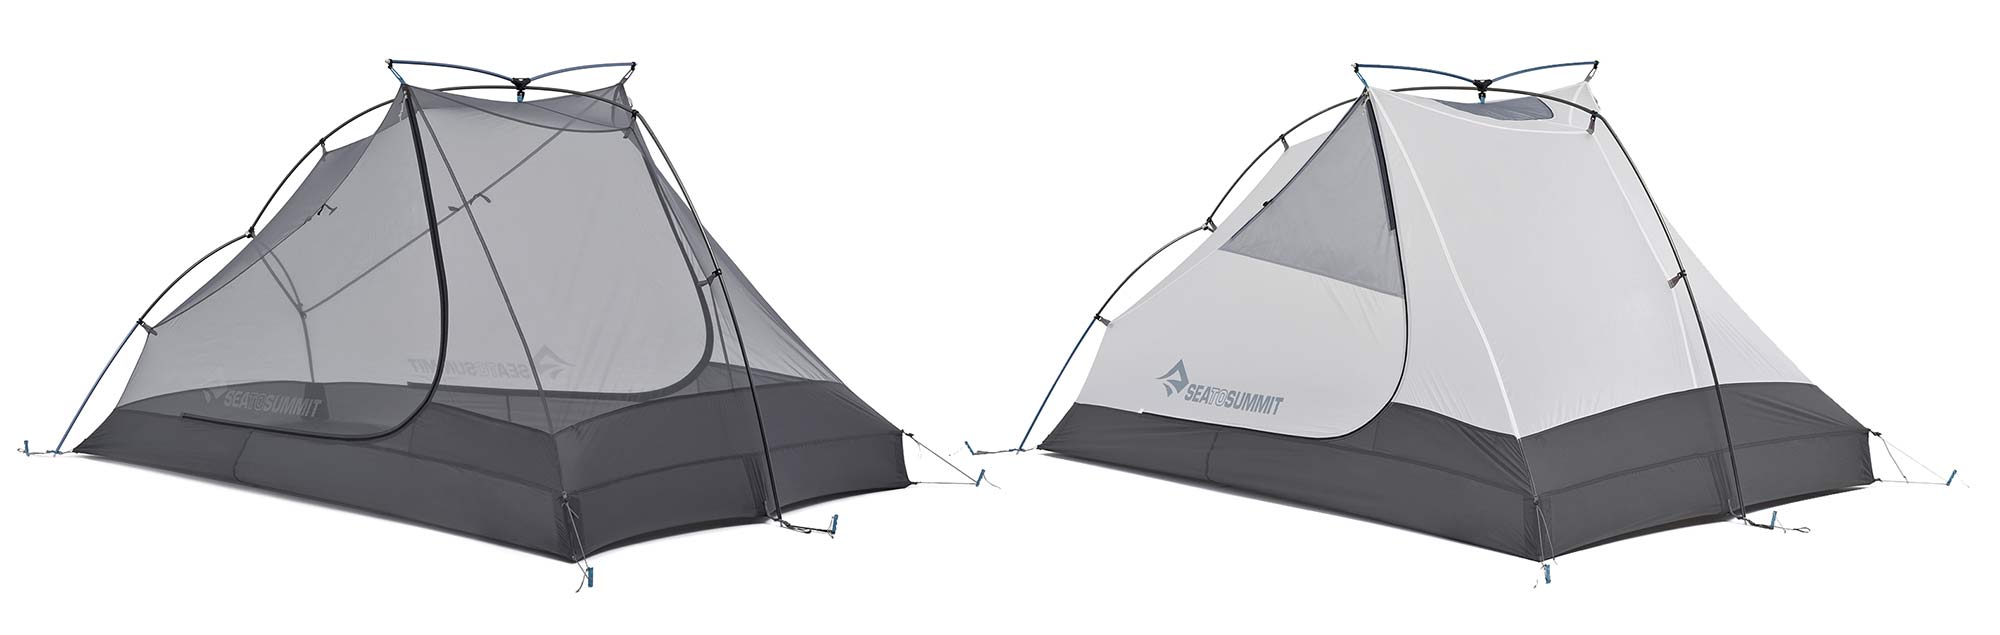 Sea to Summit Alto and Telos TR lightweight tents, Tension Ridge modular 3-season ultralight bikepacking tent, mesh or fabric